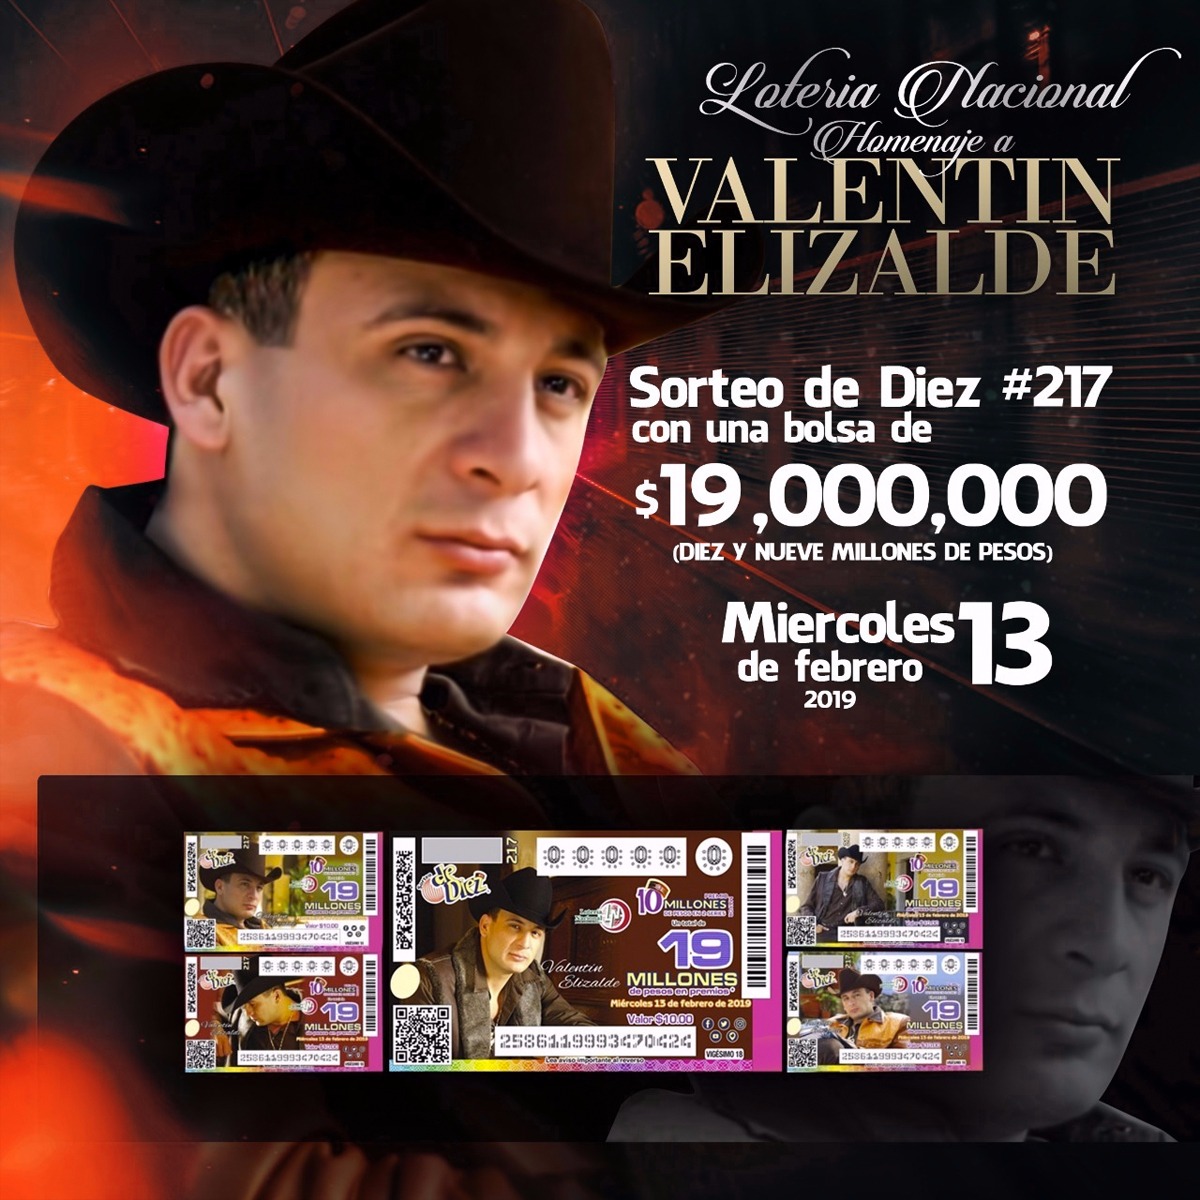 Lucirán billetes de Lotería Nacional imagen de Valentín Elizalde | Sinaloa  en Linea